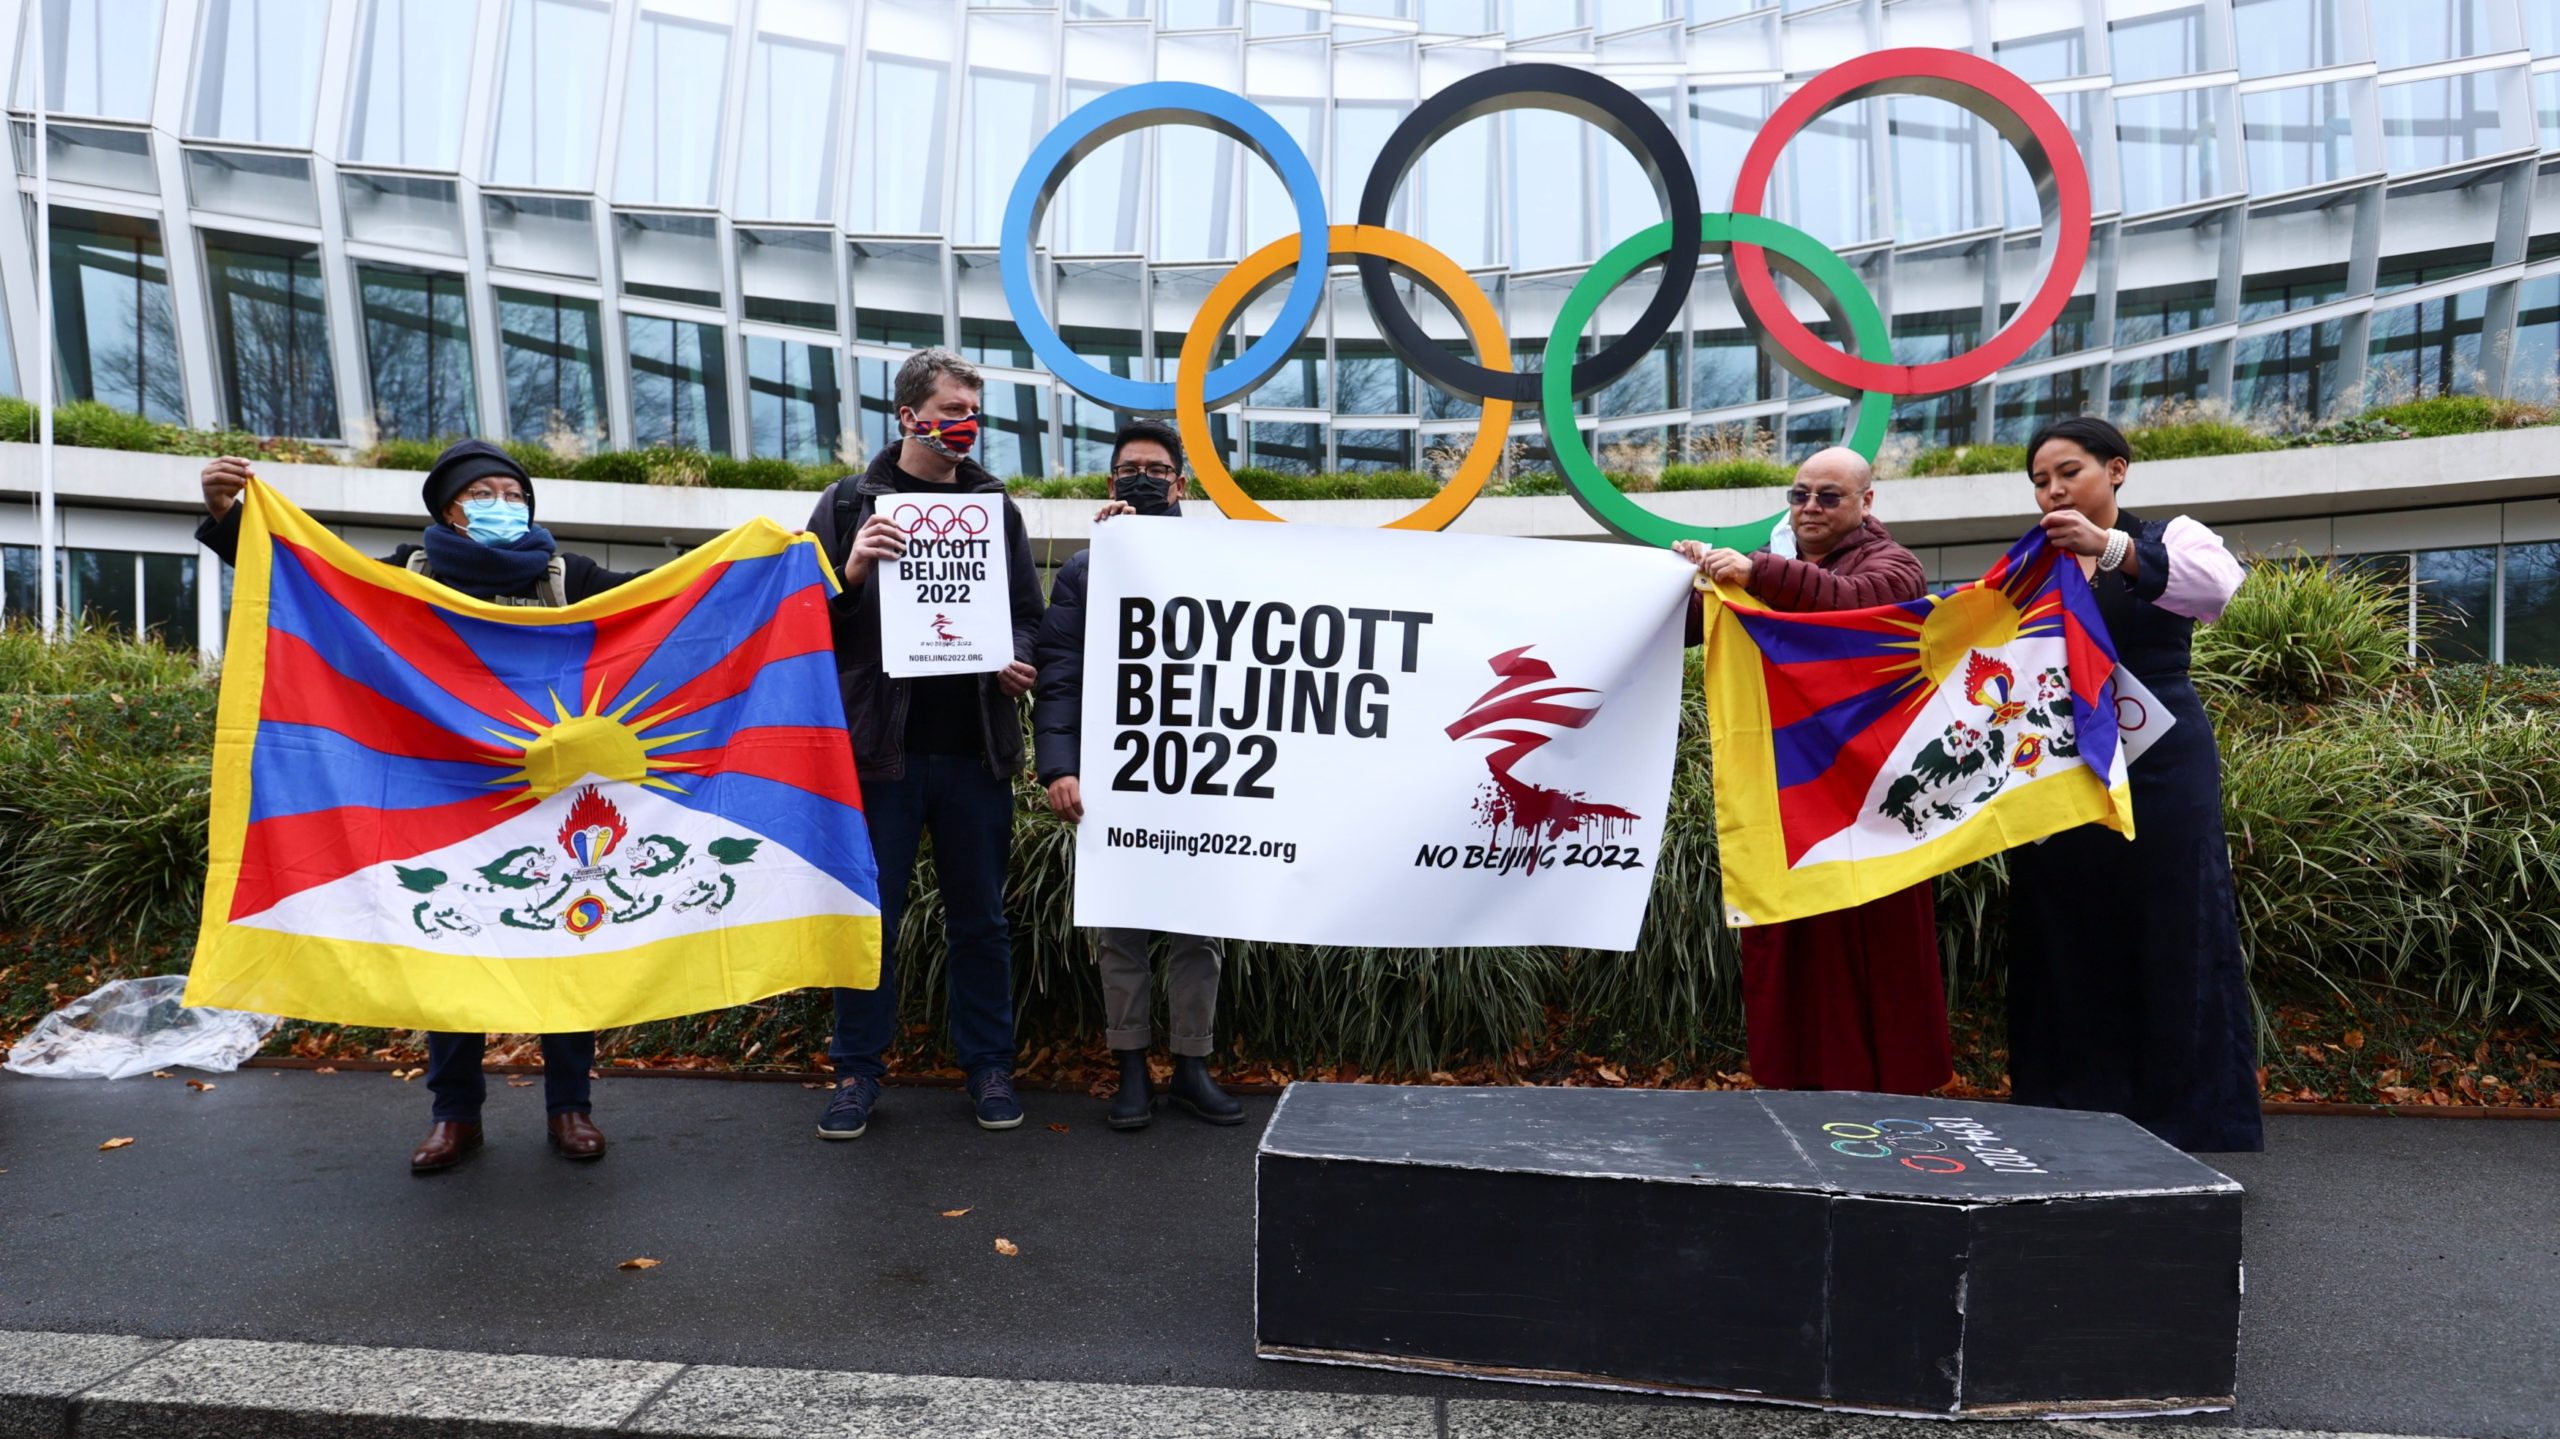 China Threatens ‘Countermeasures’ If US Boycotts Olympics